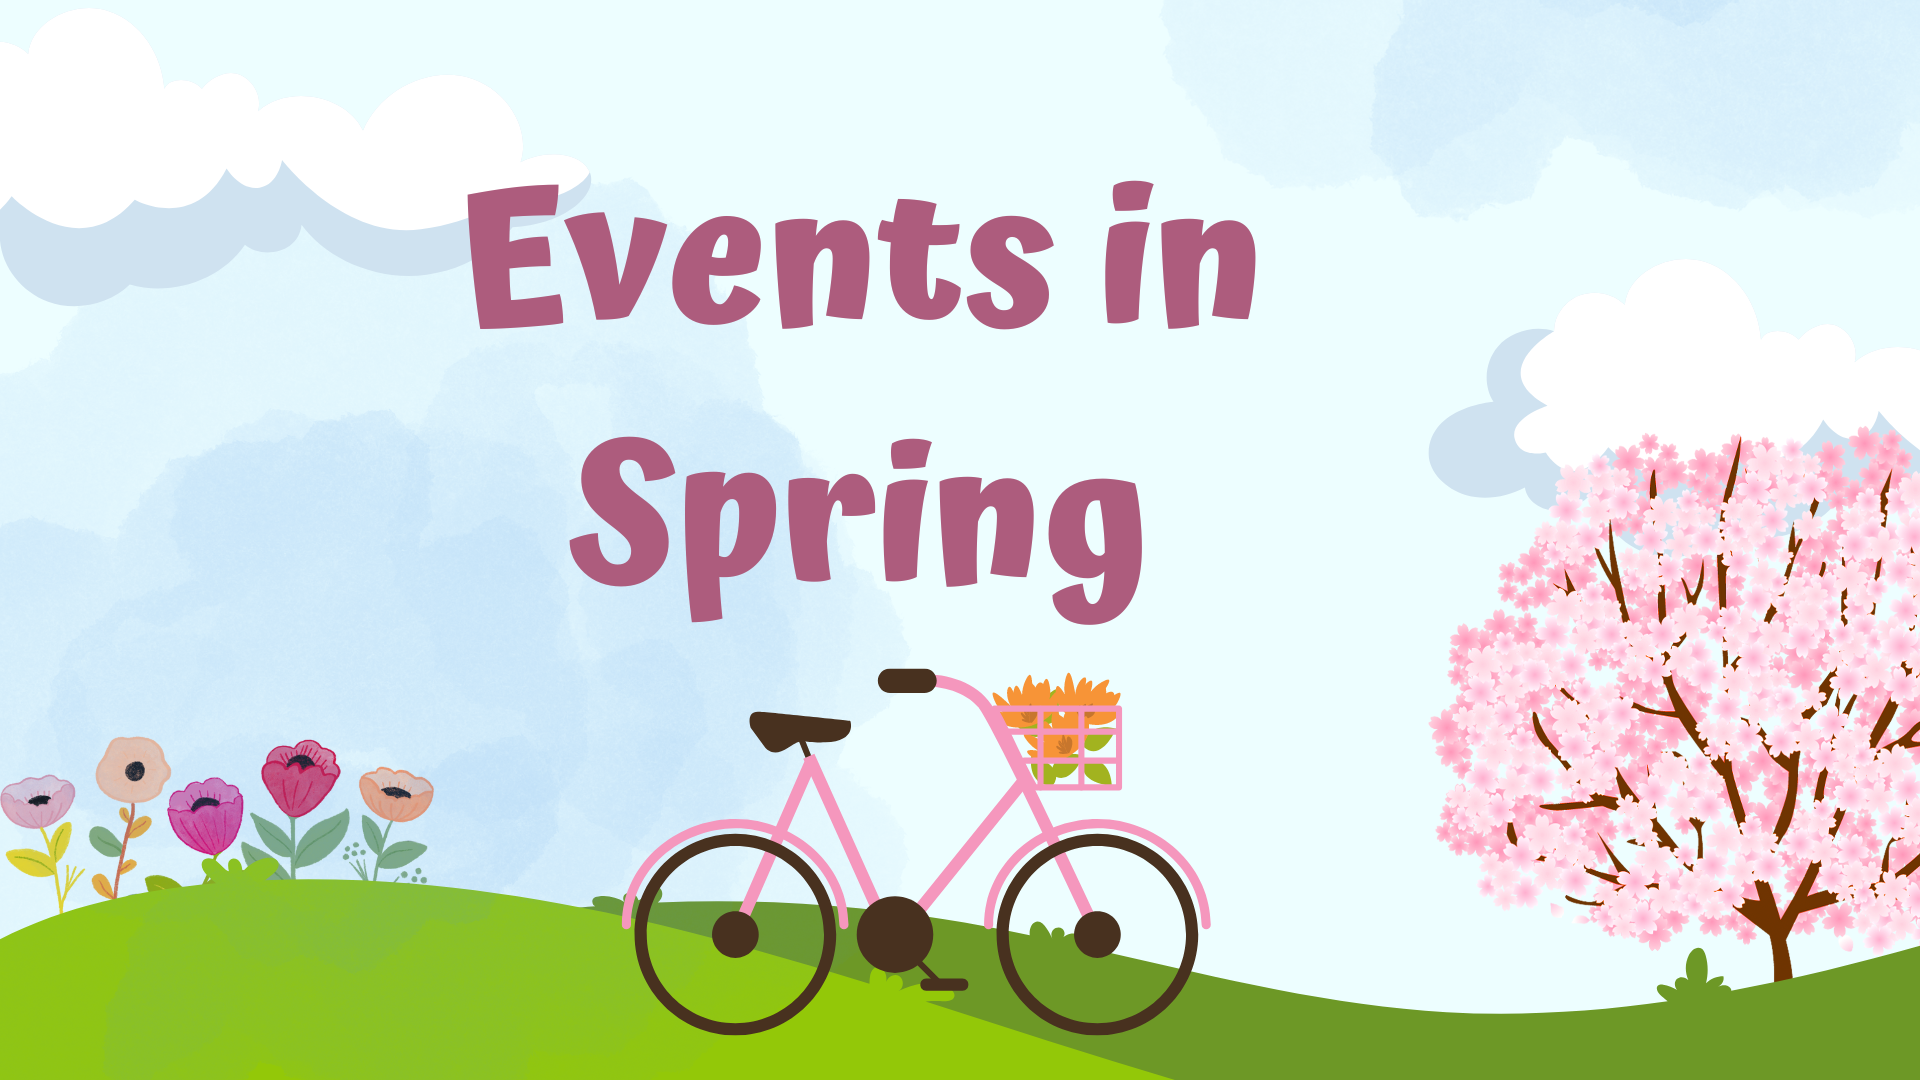 Spring flowers, bicycle, "Events in Springs"